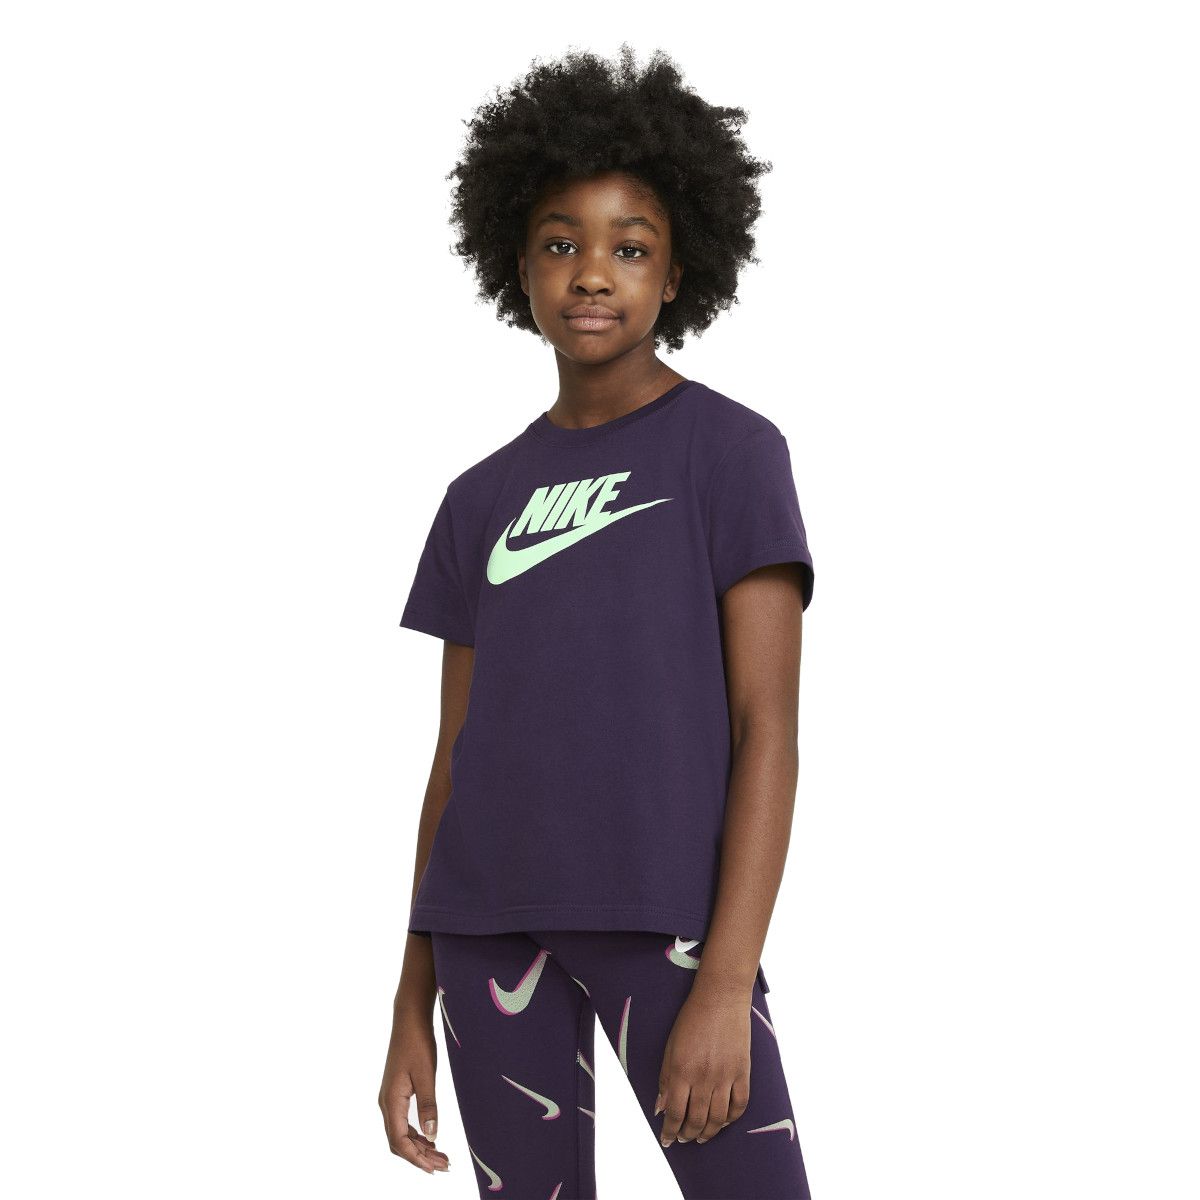 Nike Sportswear Girls' T-Shirt AR5088-525